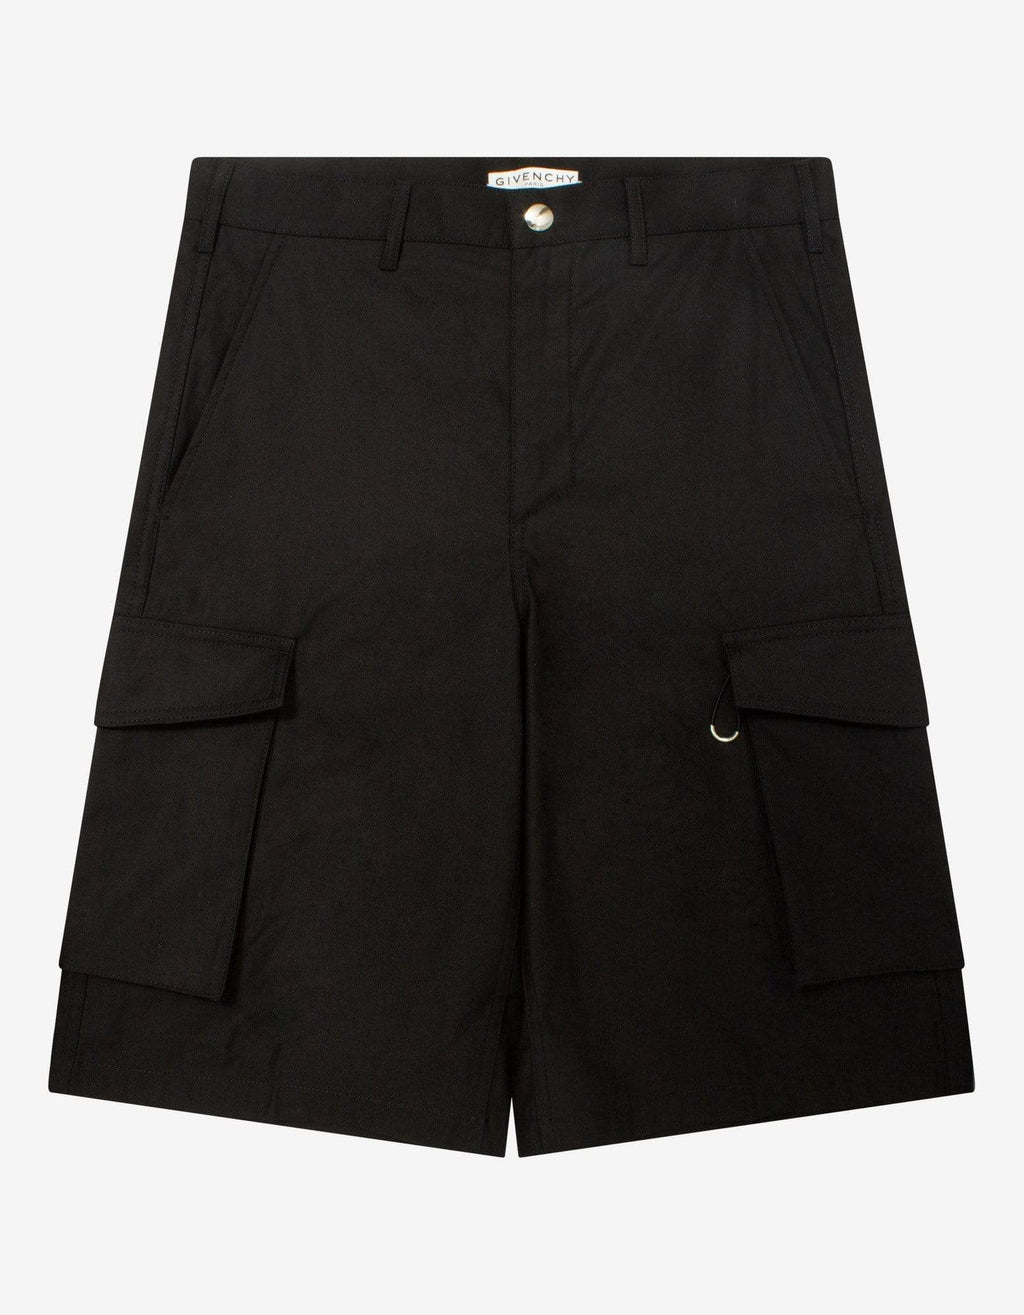 Givenchy Givenchy Black Cargo Shorts